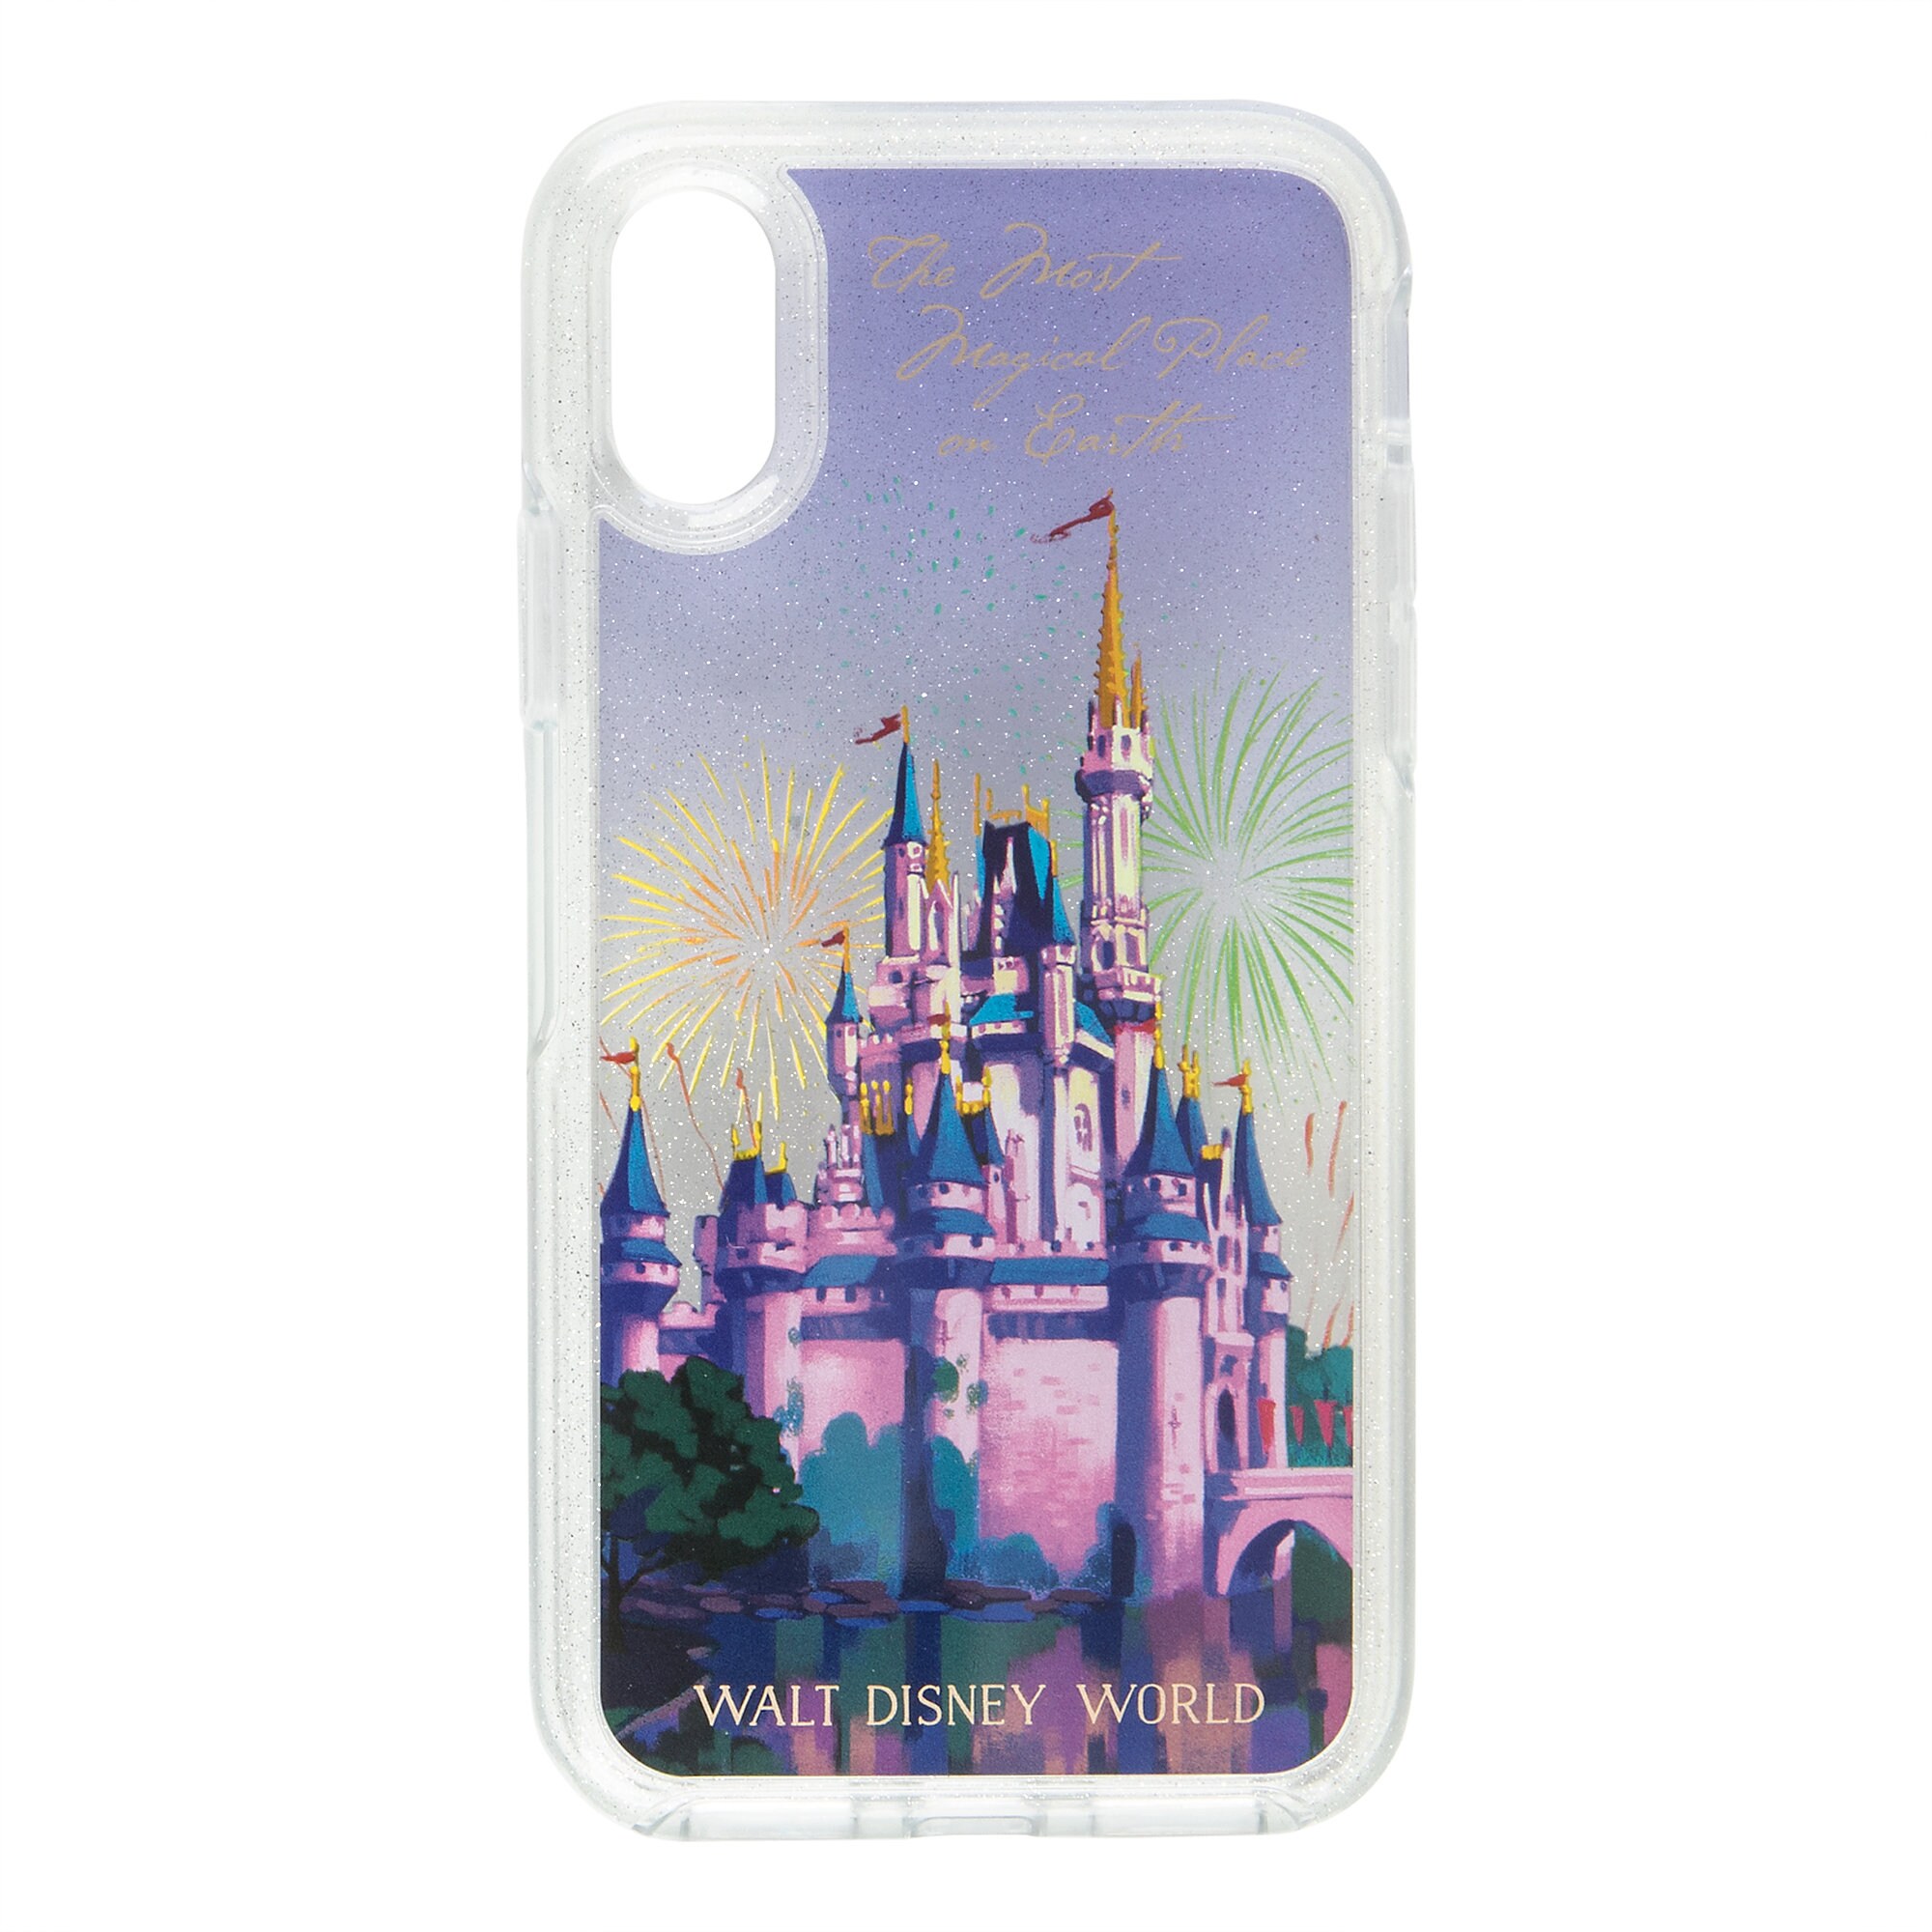 Cinderella Castle iPhone X/Xs Case by Otterbox - Walt Disney World